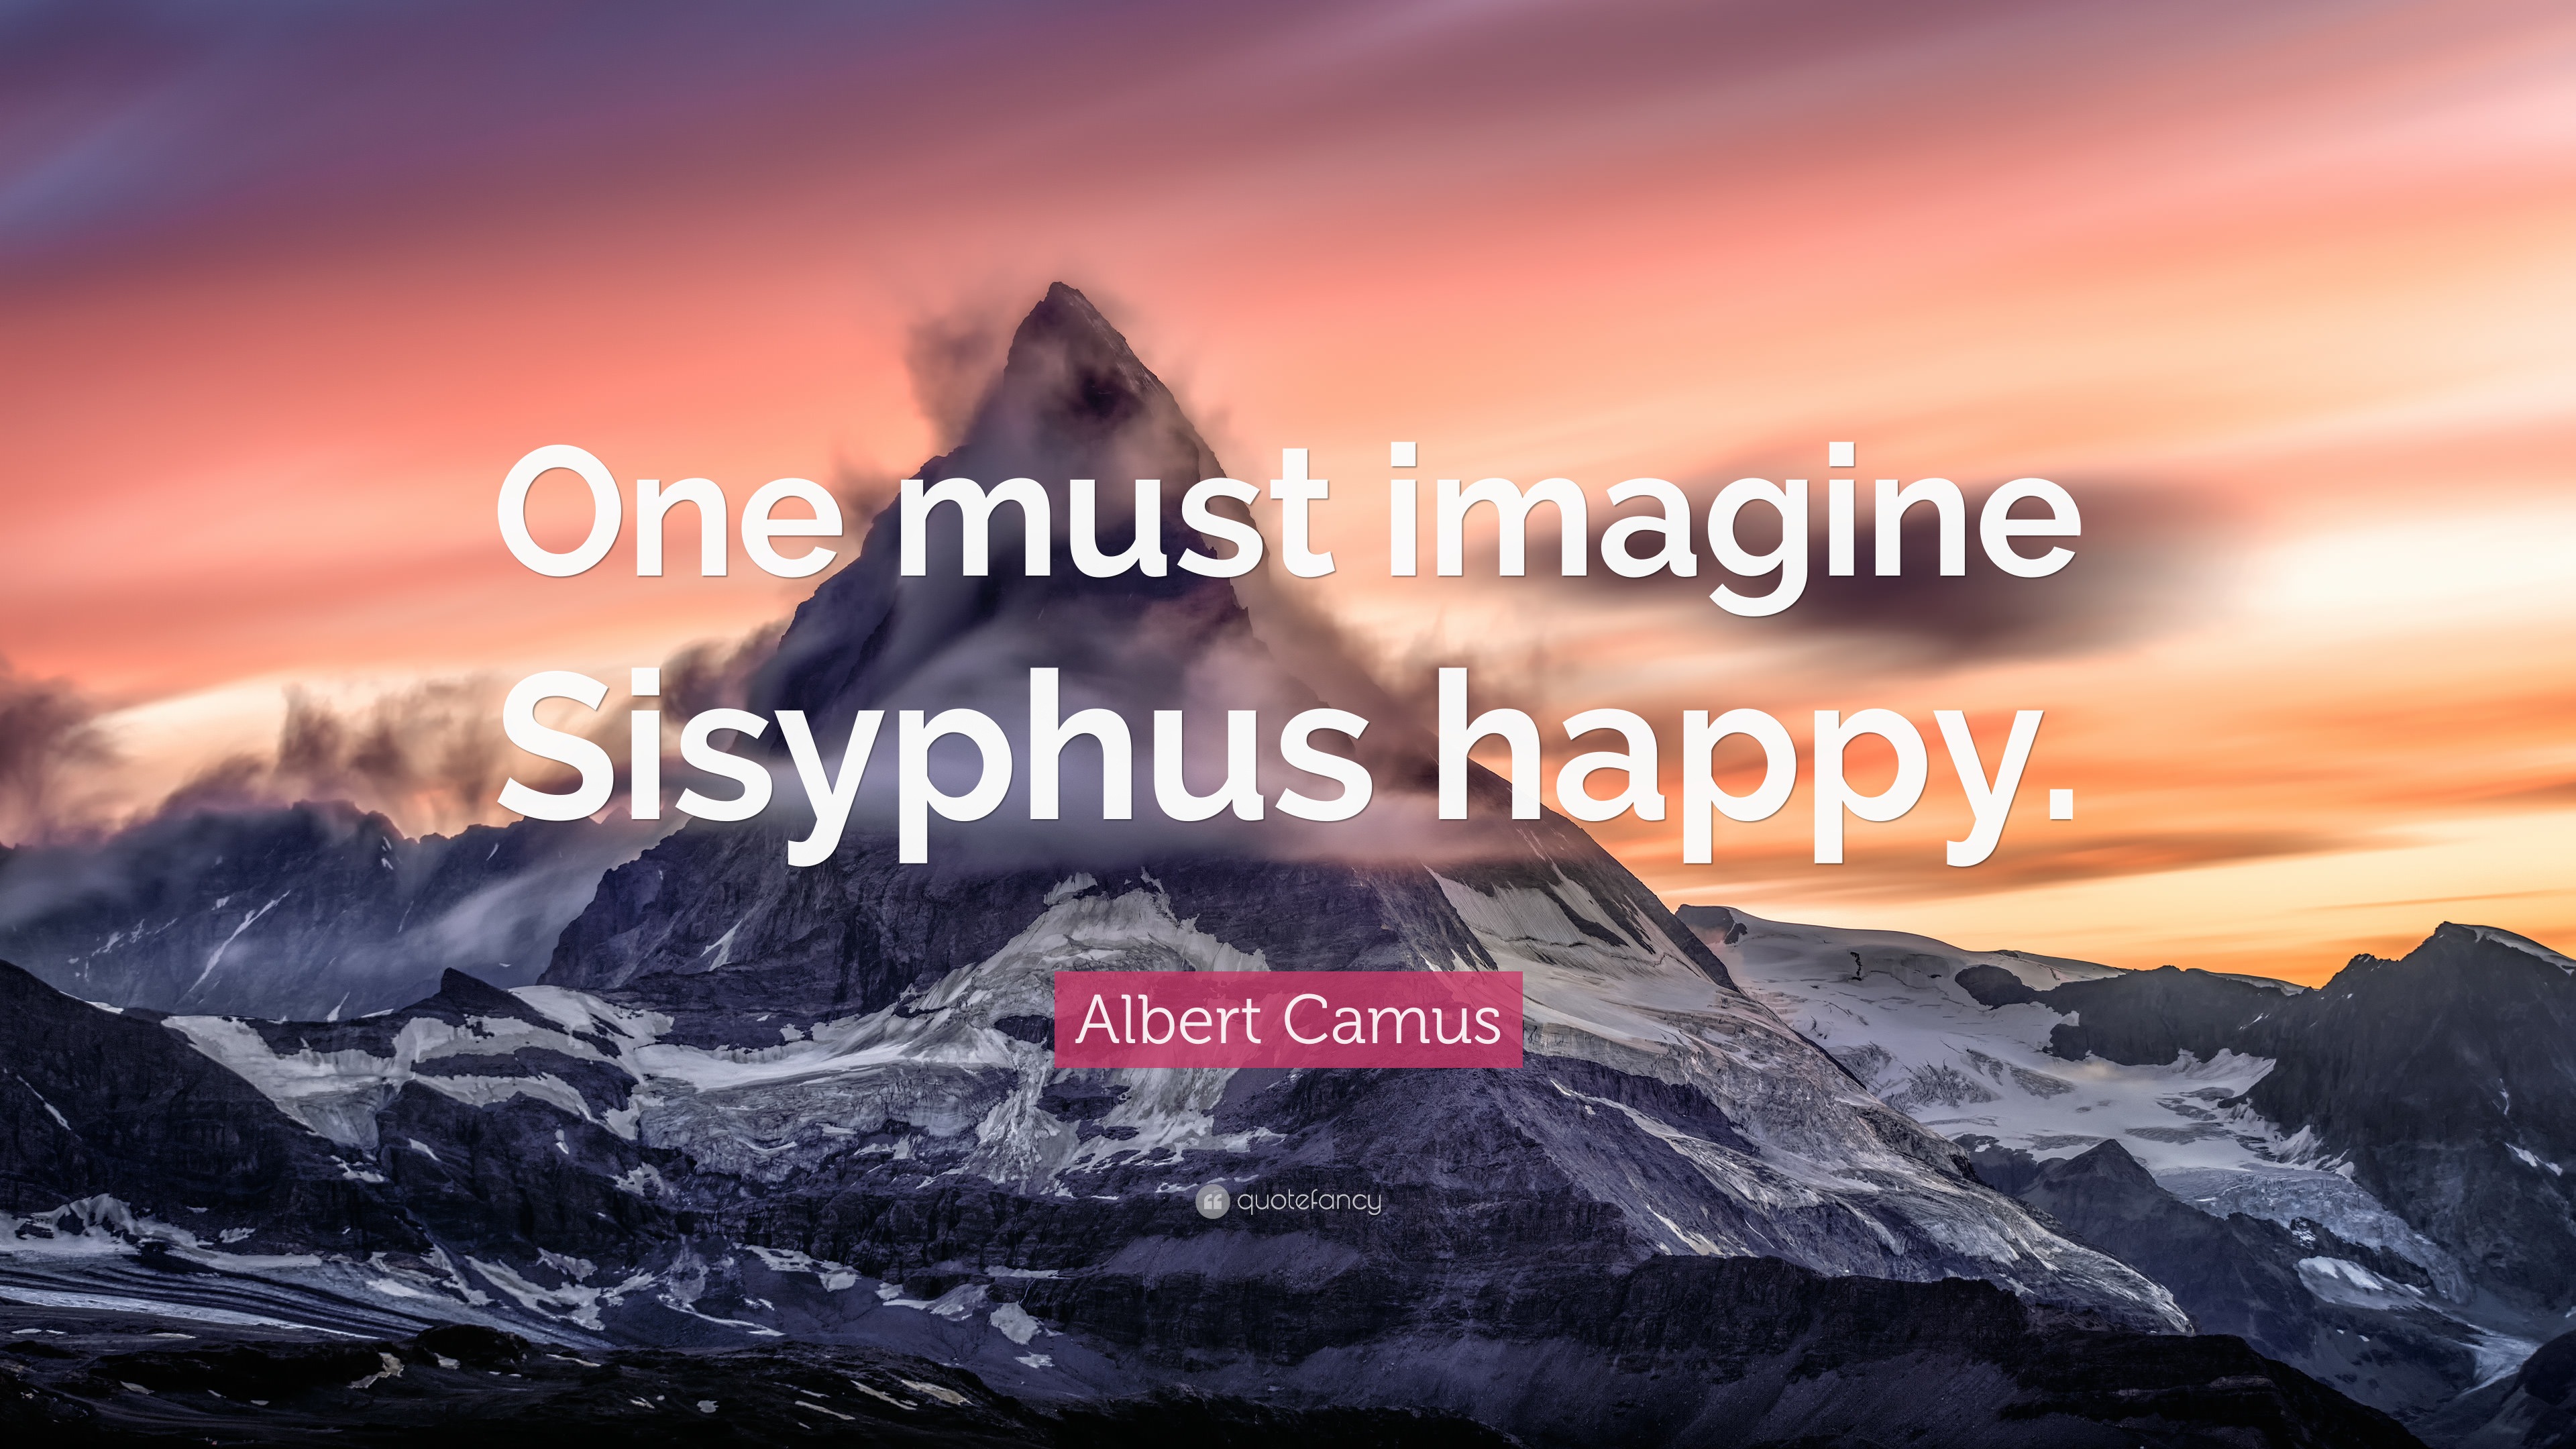 Albert Camus Quote: “One must imagine Sisyphus happy.” (12 wallpapers